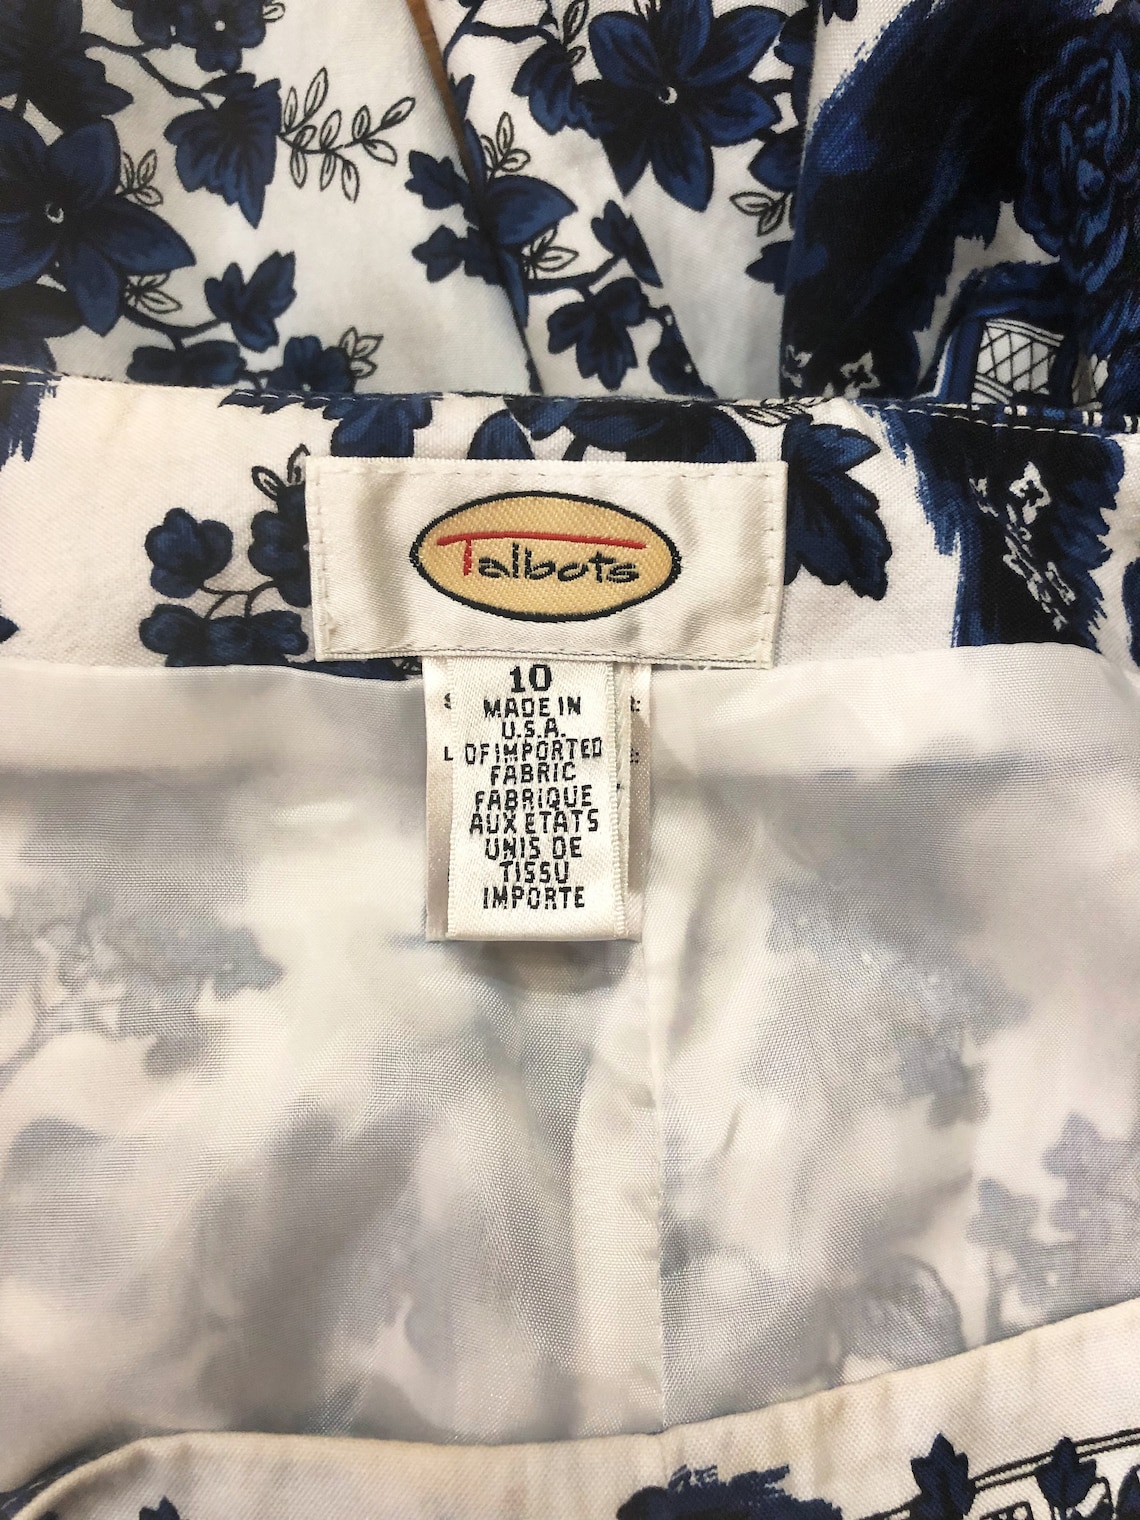 Blue Willow Capris Pants Talbots Clam Diggers Cotton Capris - Etsy